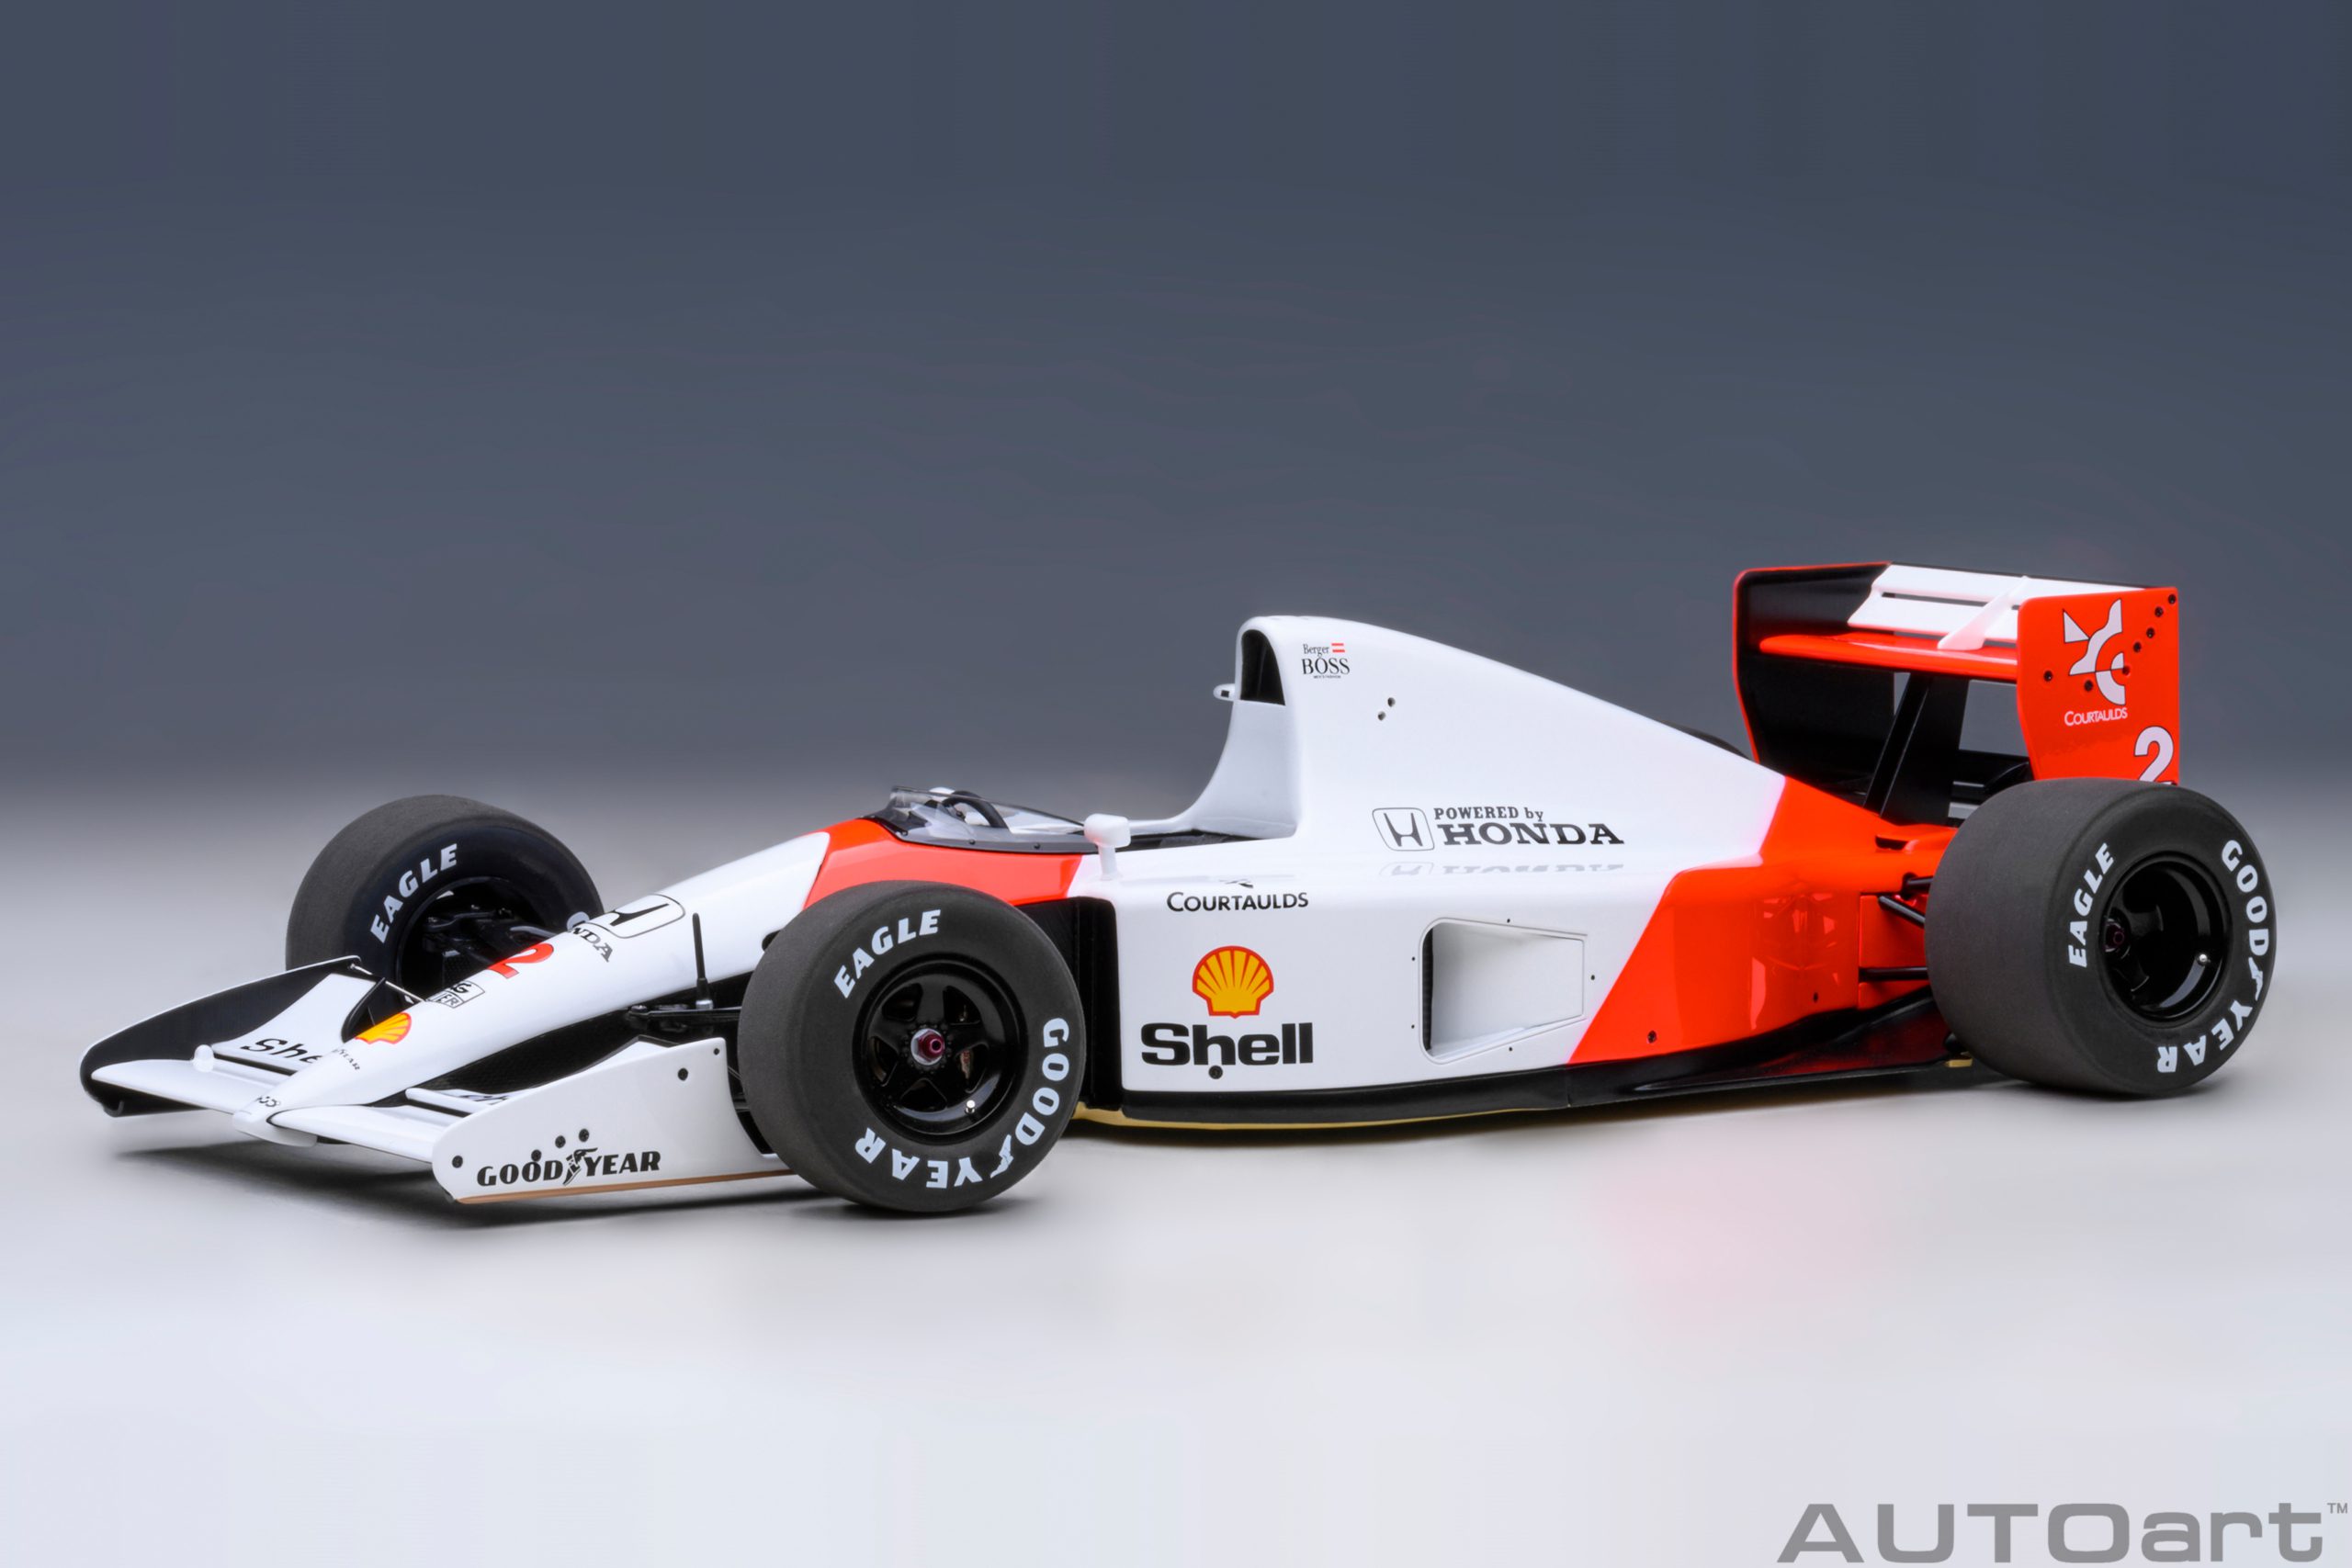 autoart-89152-1-McLaren-Honda-MP4-6-Gerhard-Berger-Japanese-GP-1991-white-version-decals